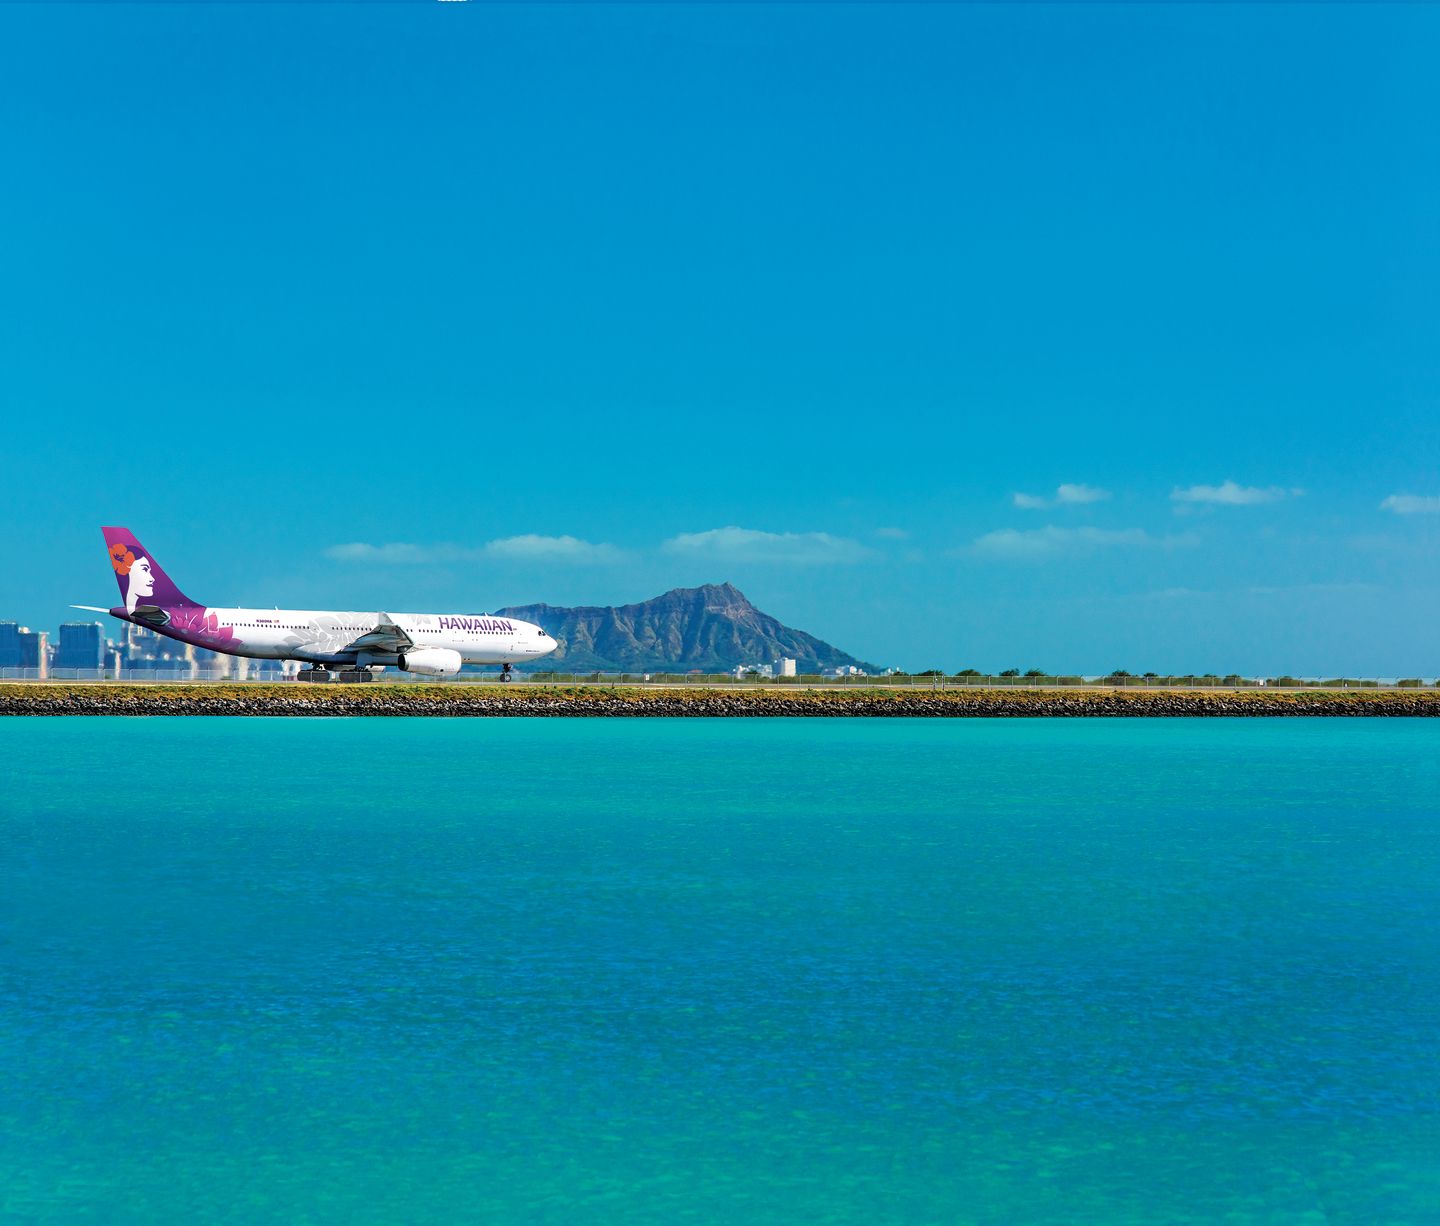 Hawaiian Airlines A330-200 at Honolulu International Airport's Reef Runway Diamond head